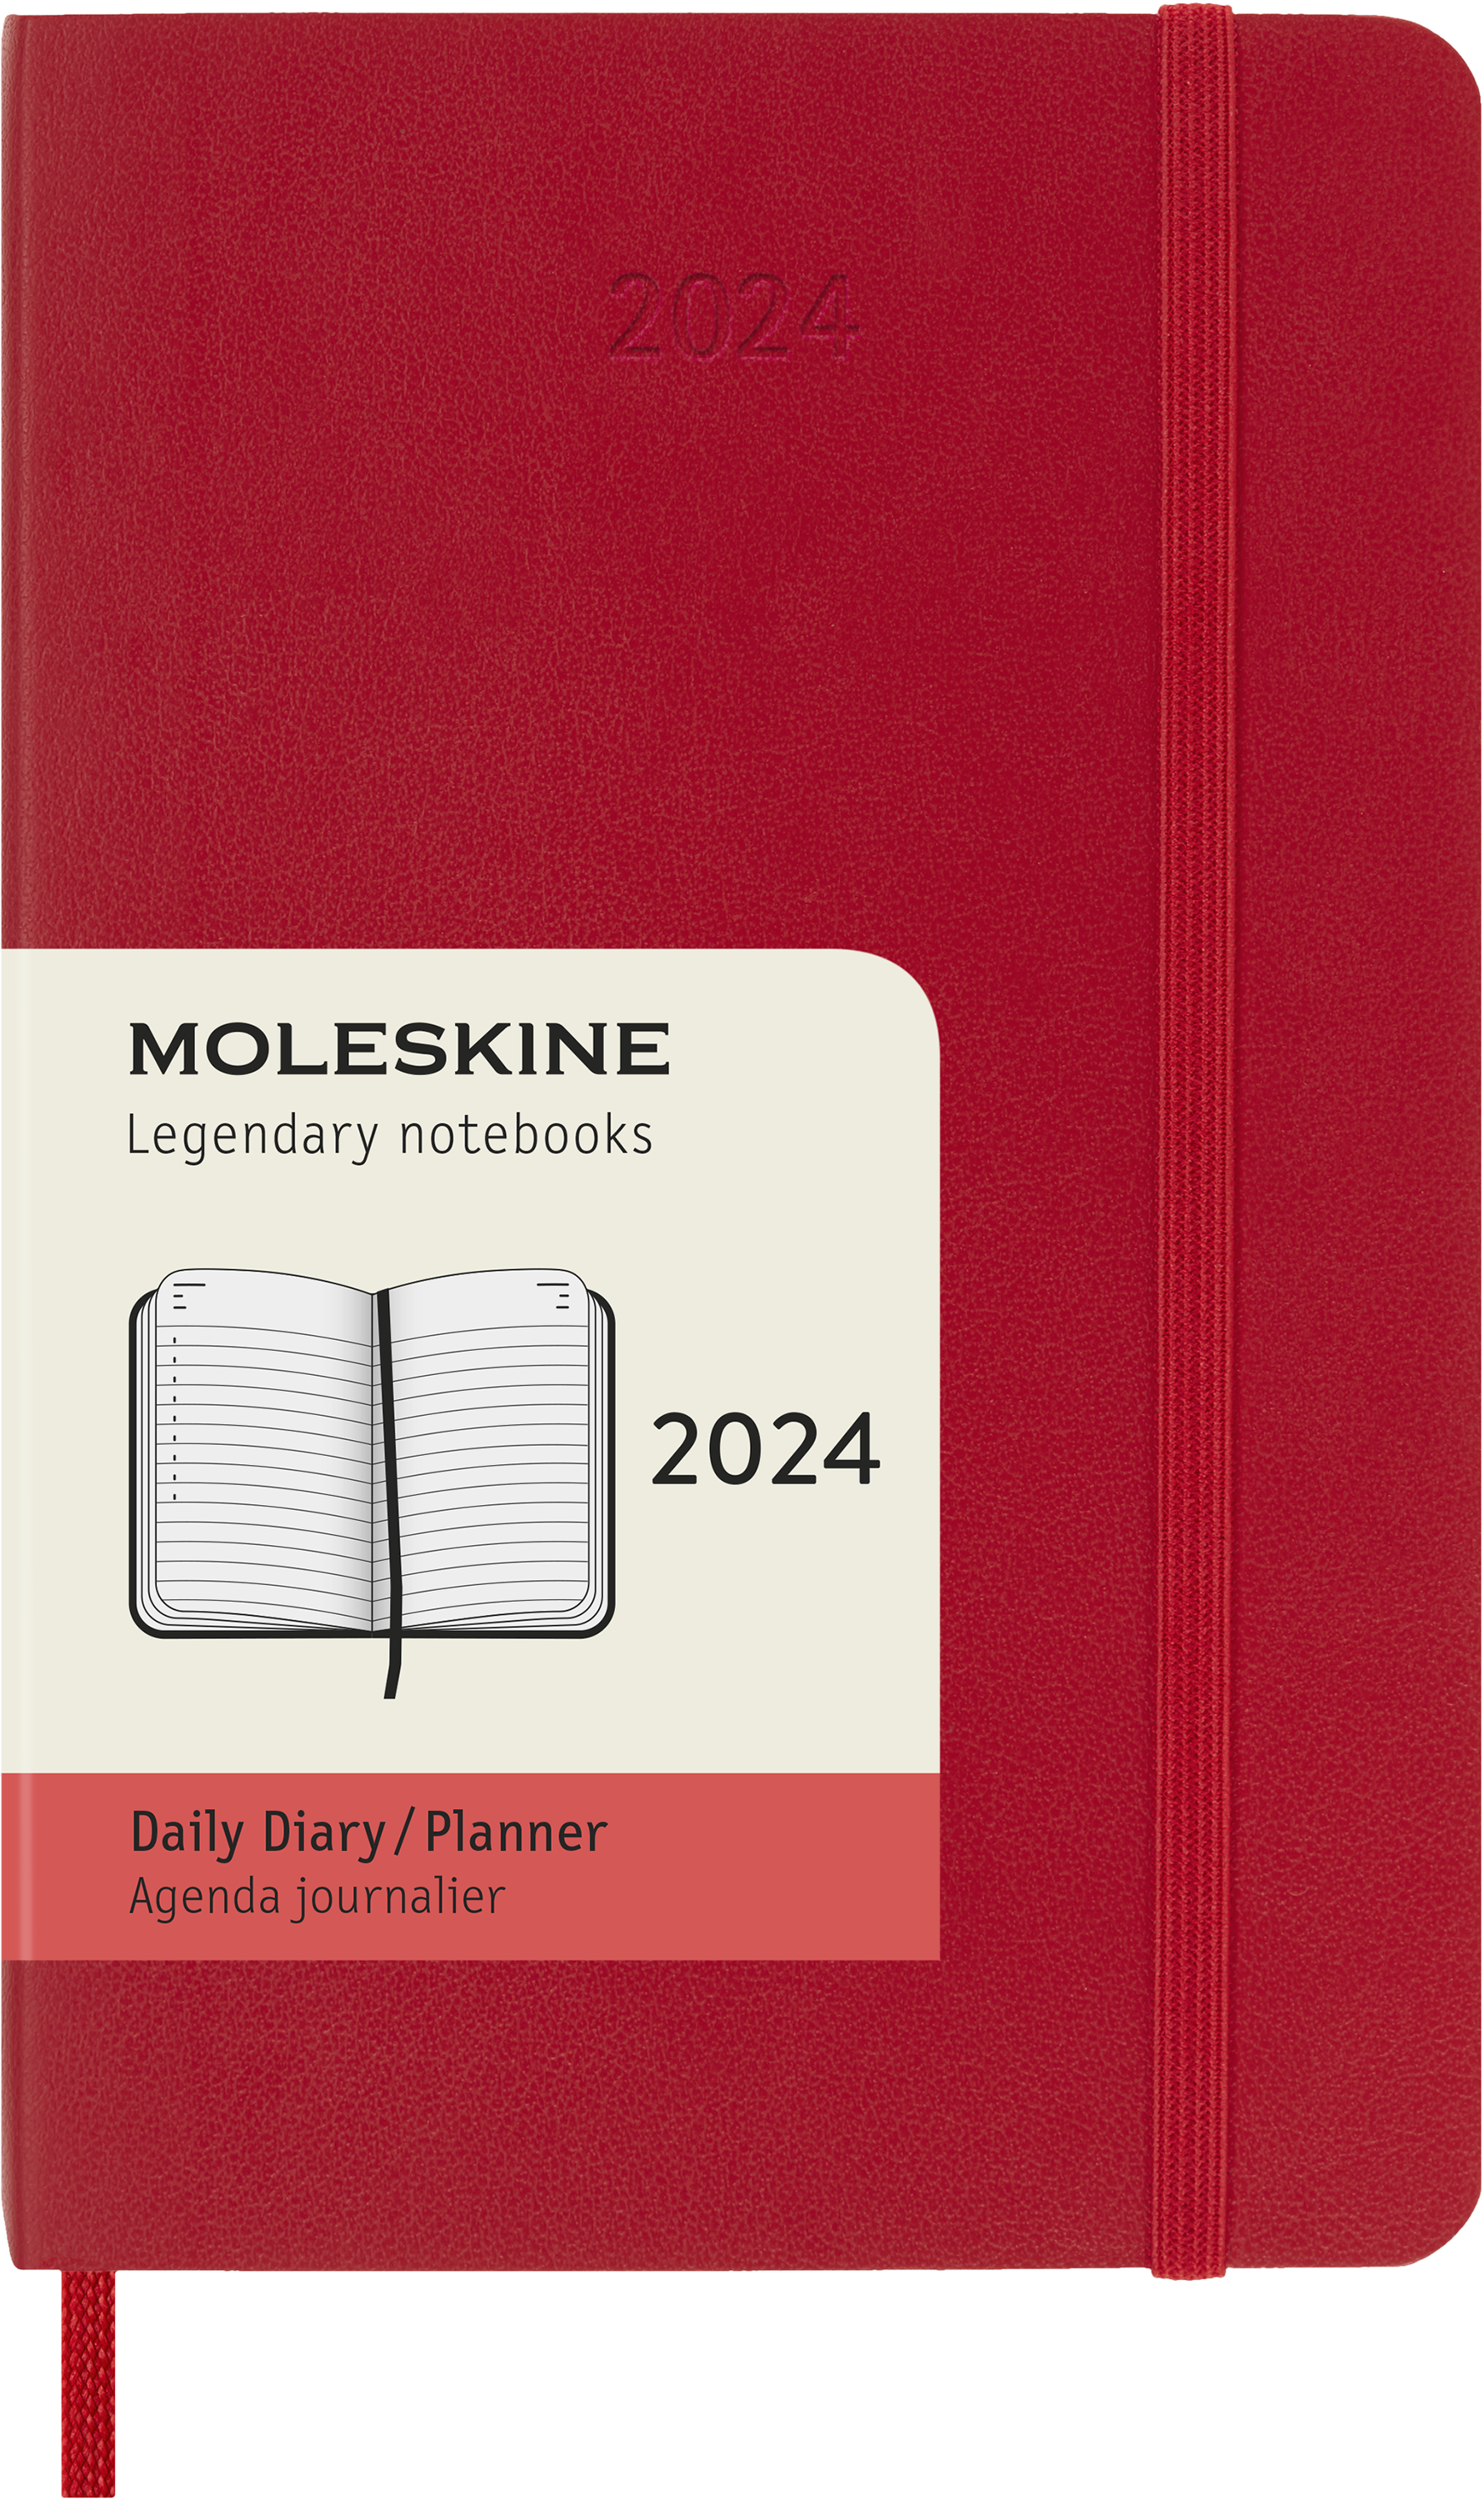 Moleskine 2024 diary softcover pocket day